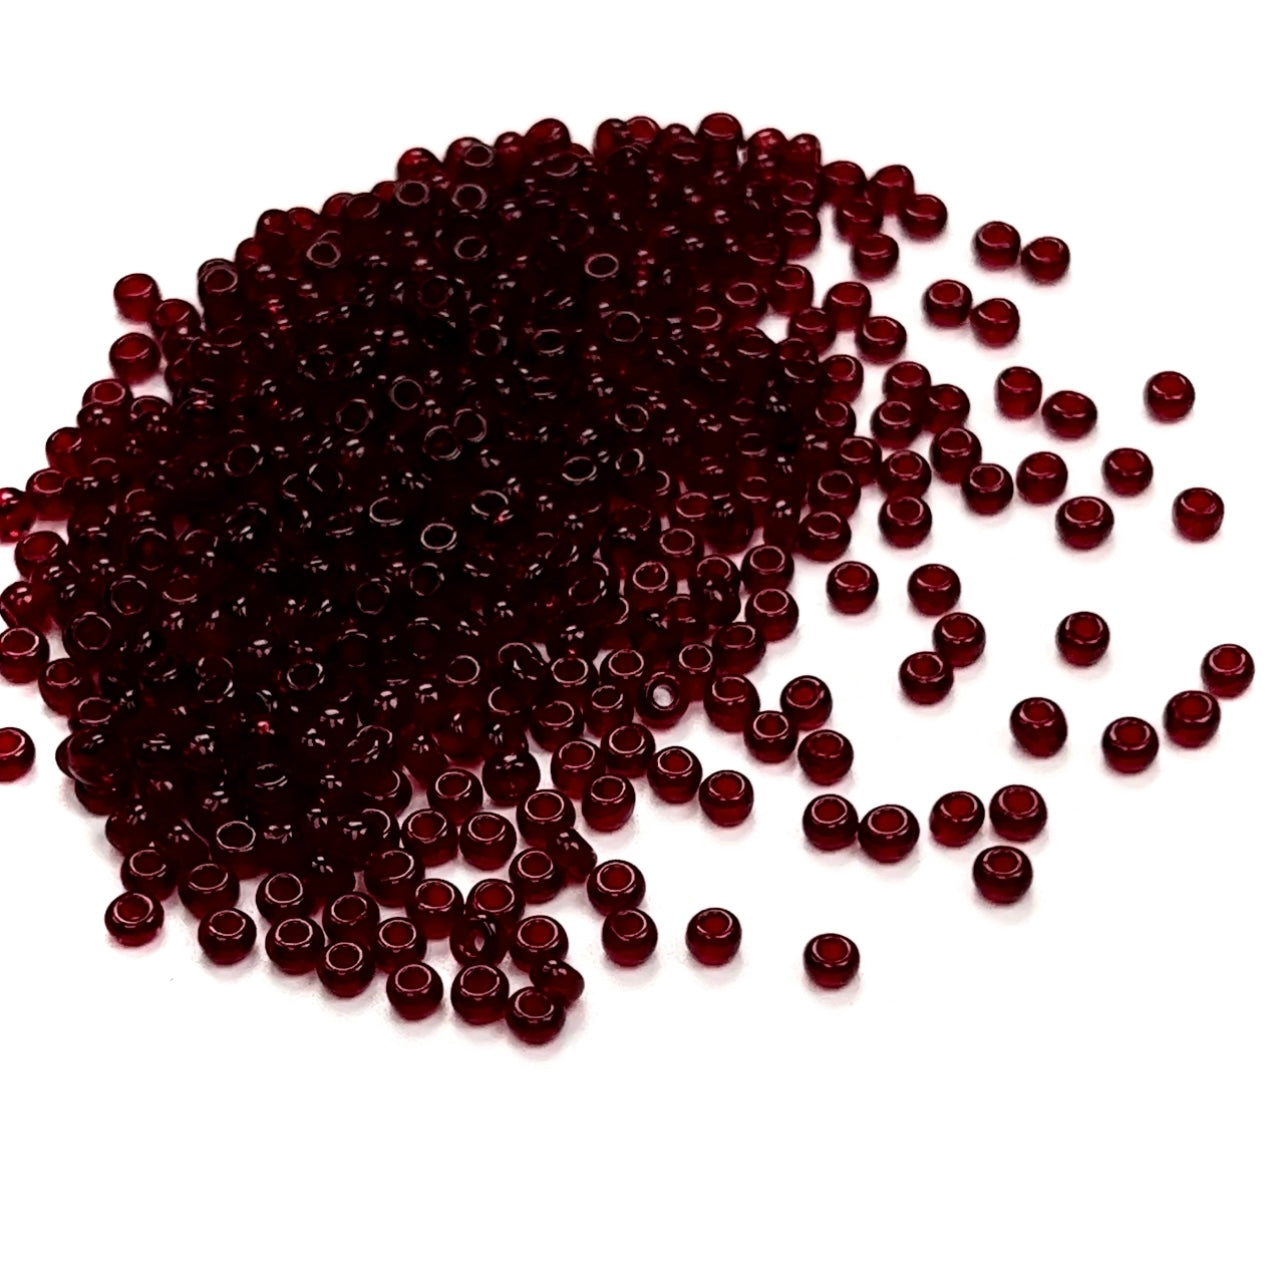 Rocailles size 7/0 (3.5mm) Garnet deep red transparent, Preciosa Ornela Traditional Czech Glass Seed Beads, 30grams (1 oz), P973